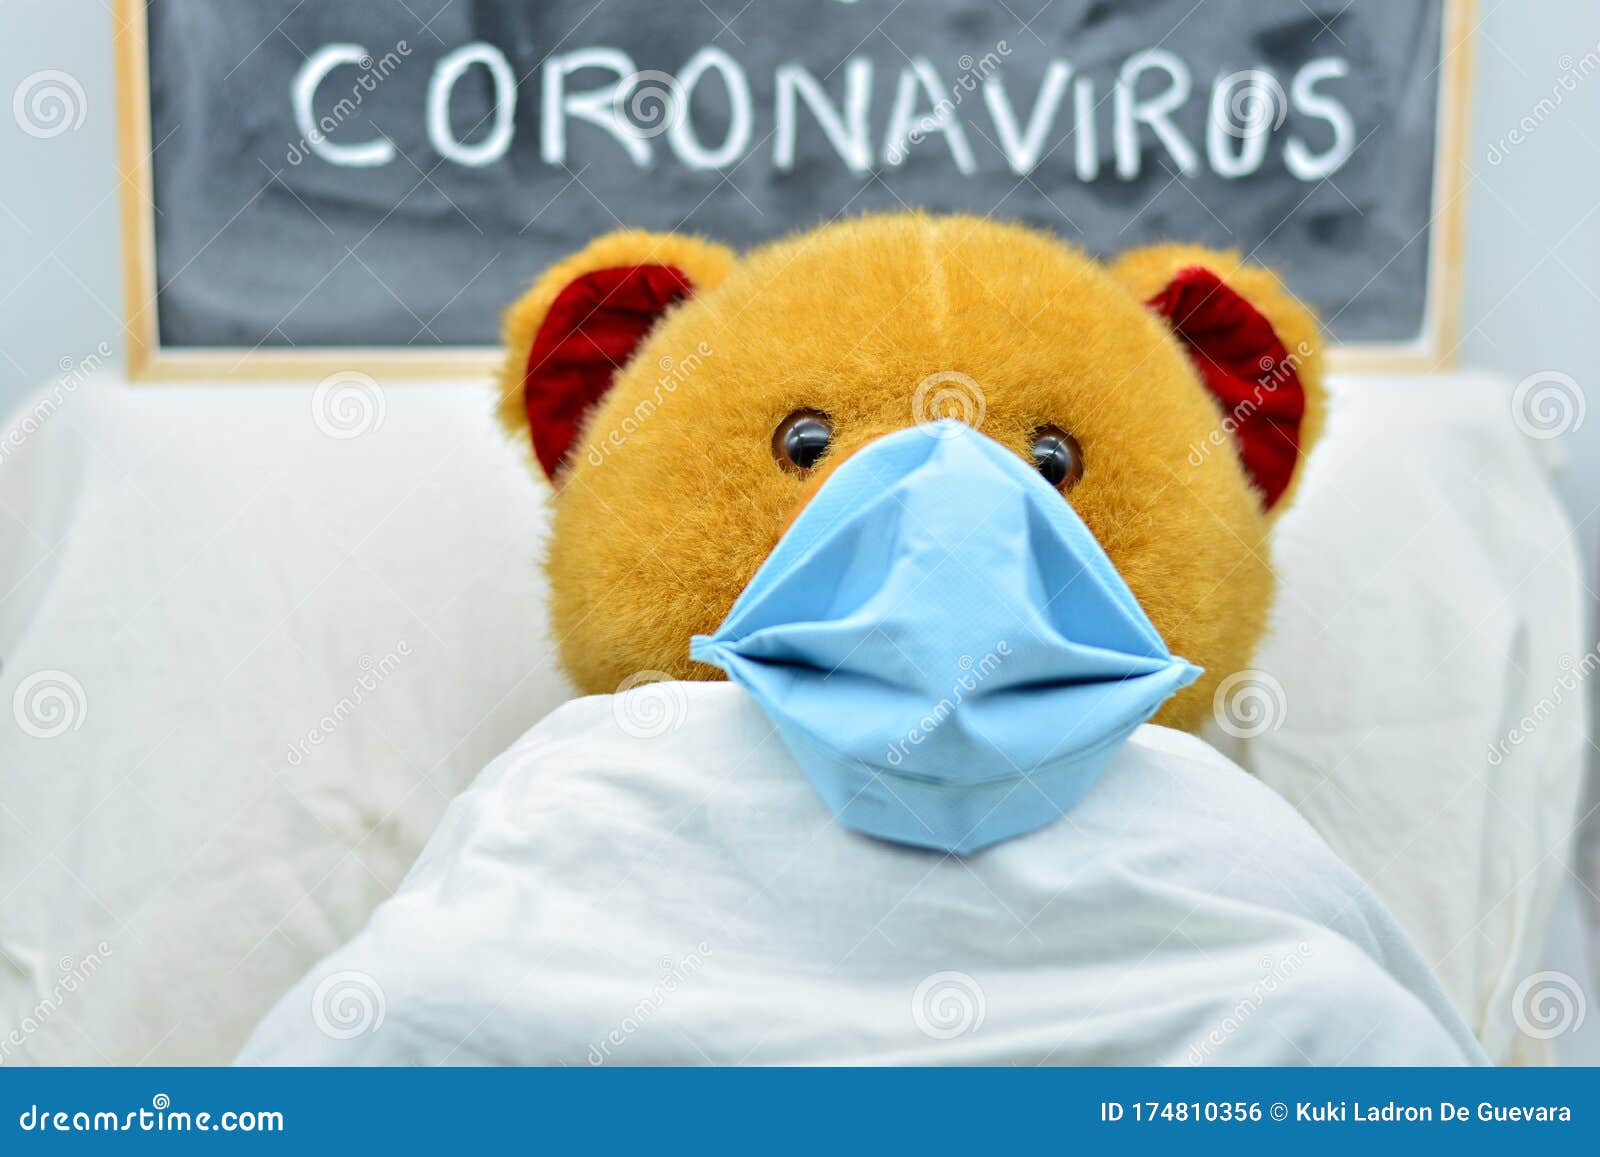 coronavirus sick teddy bear, 